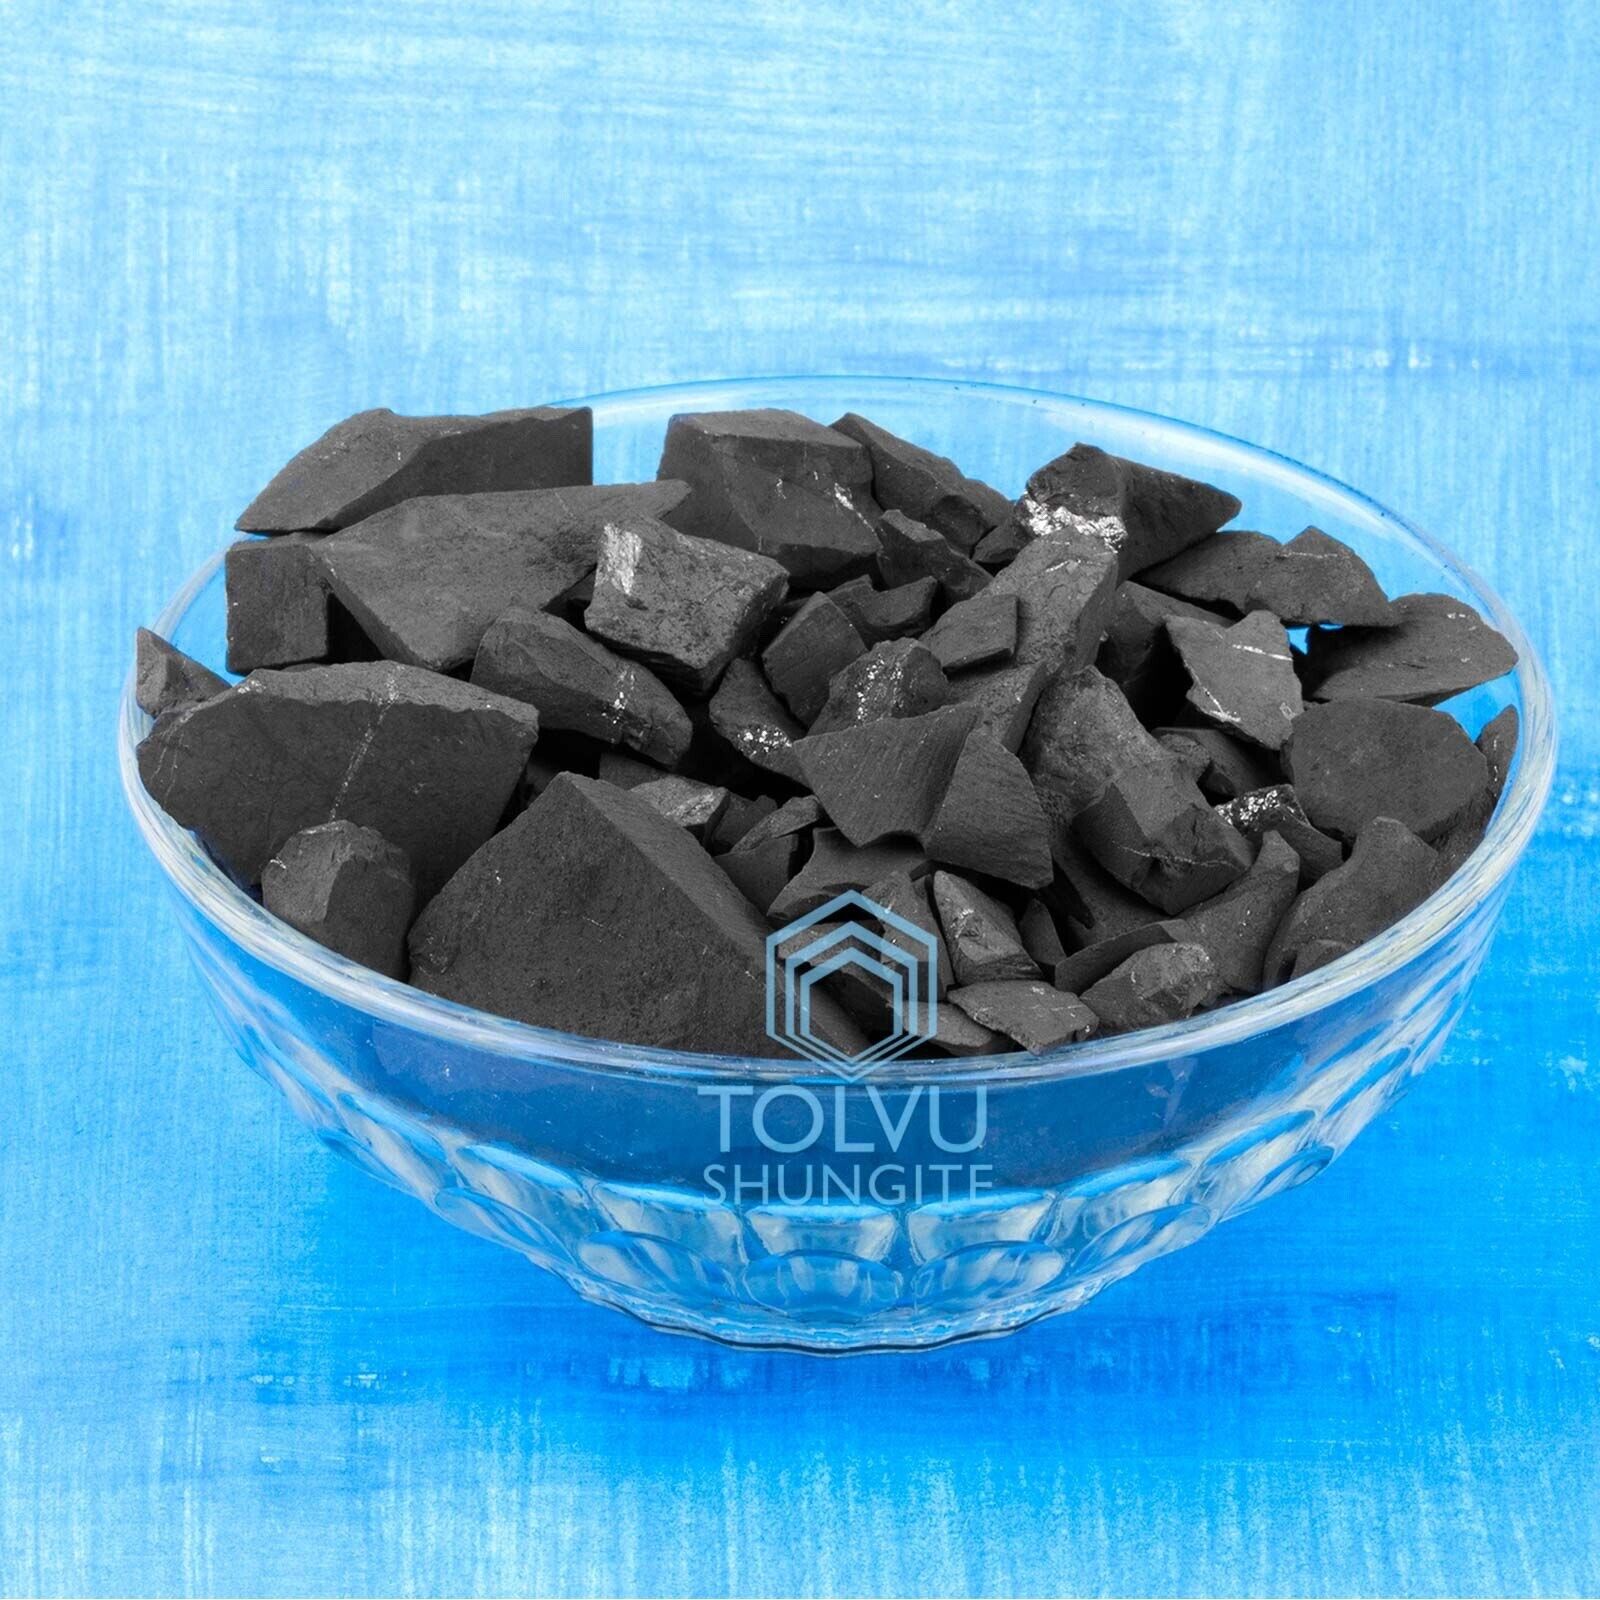 Raw Shungite stones for water purification Authentic black shungite Tolvu